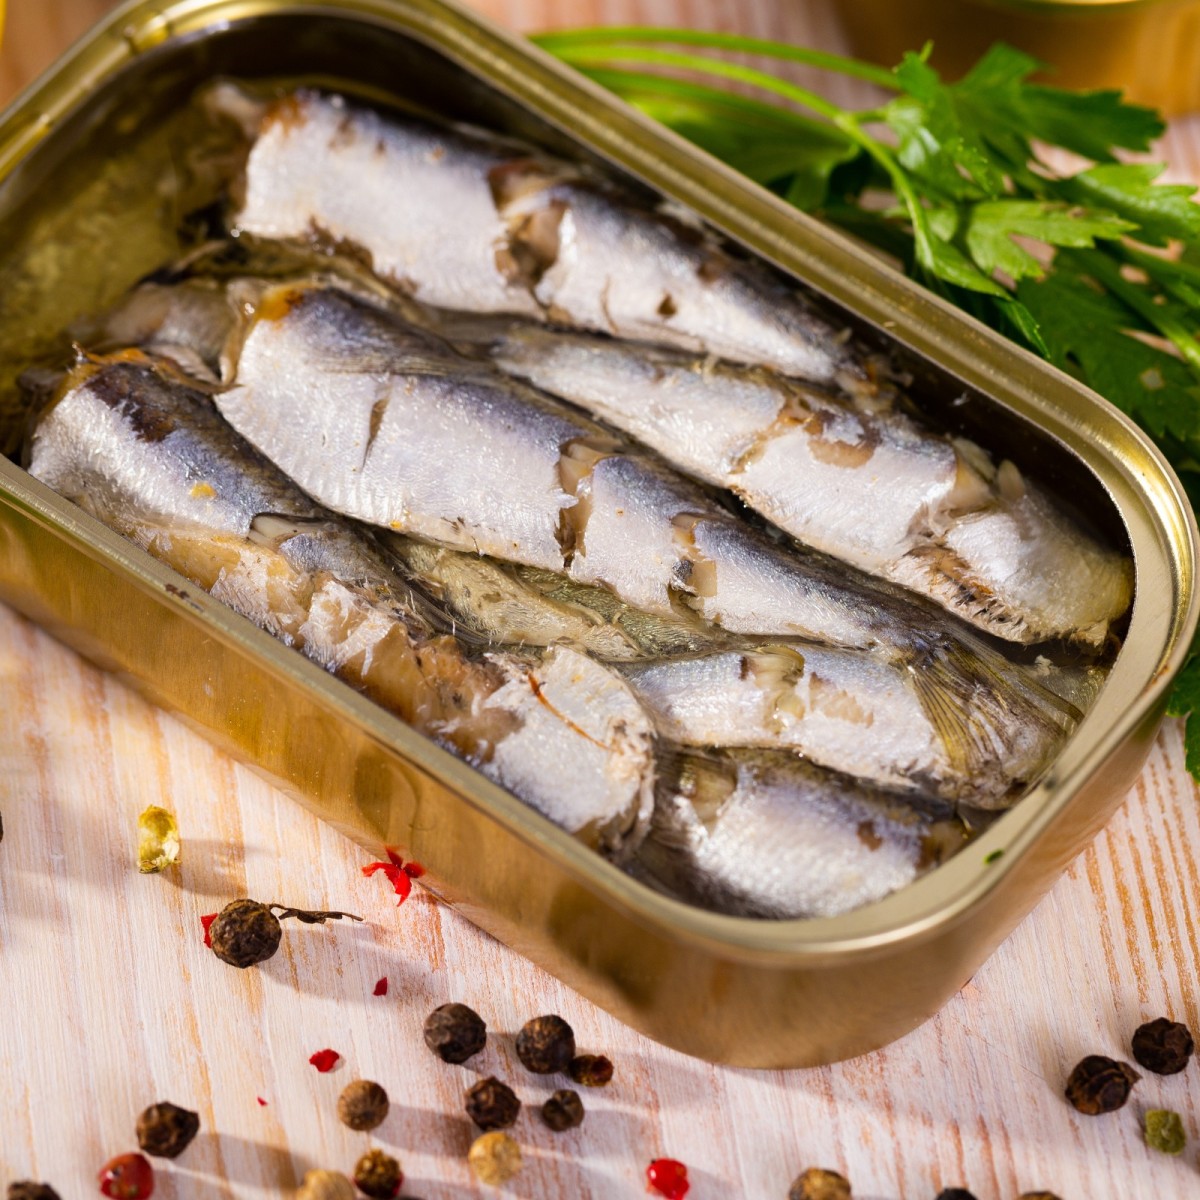 Recipes Using Sardines | ThriftyFun